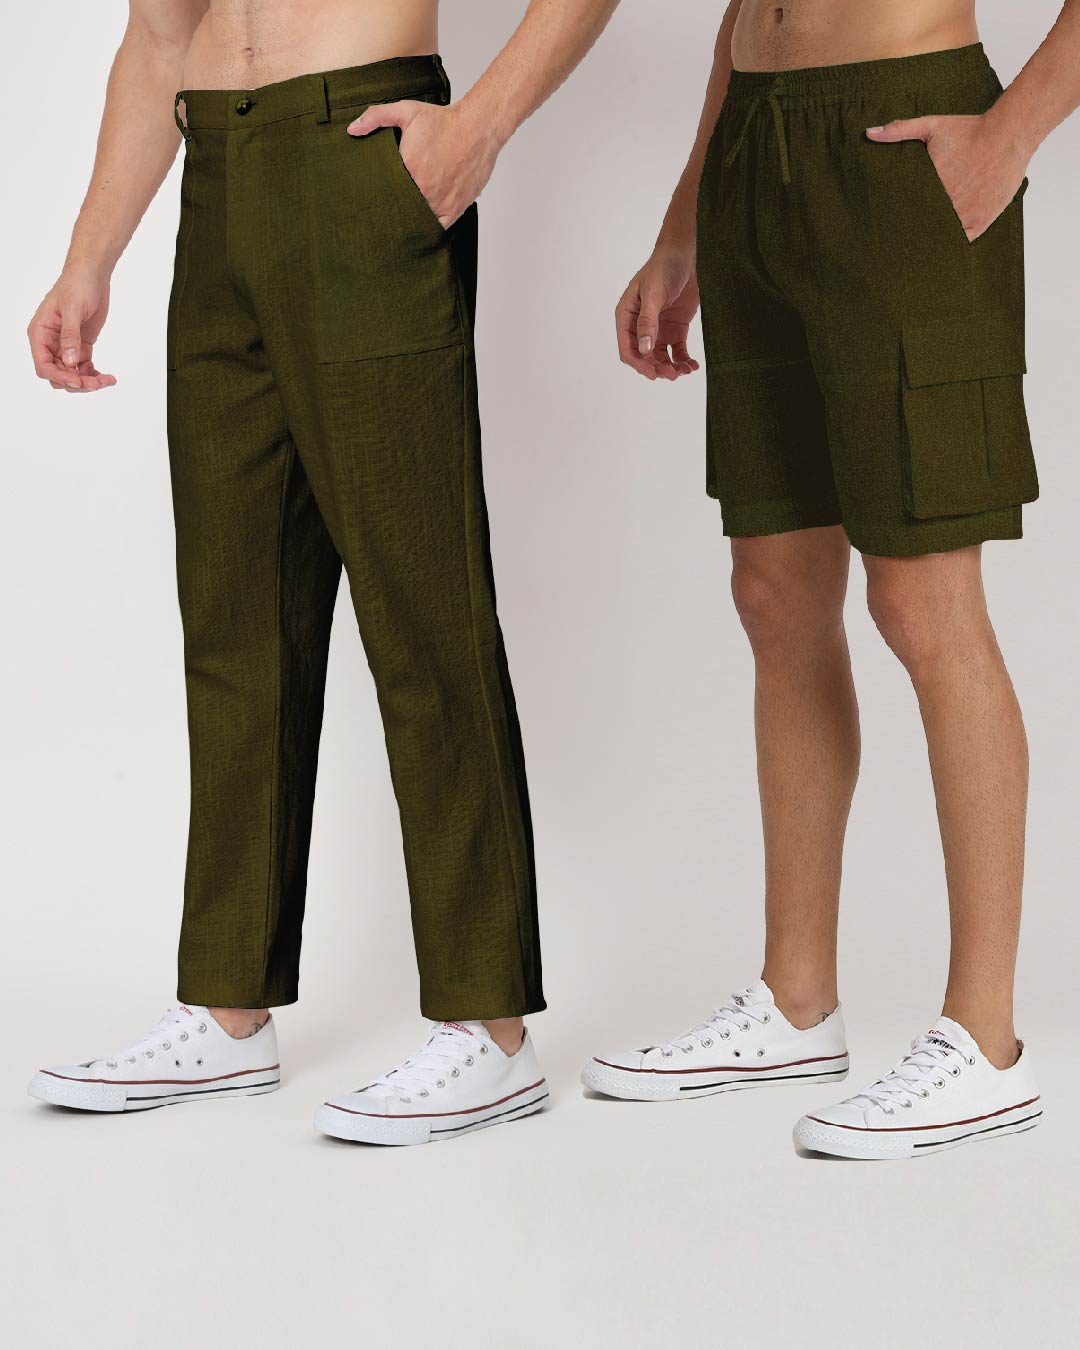 Combo : Comfy Ease & Cargo Olive Green Men's Pants & Shorts  - Set of 2